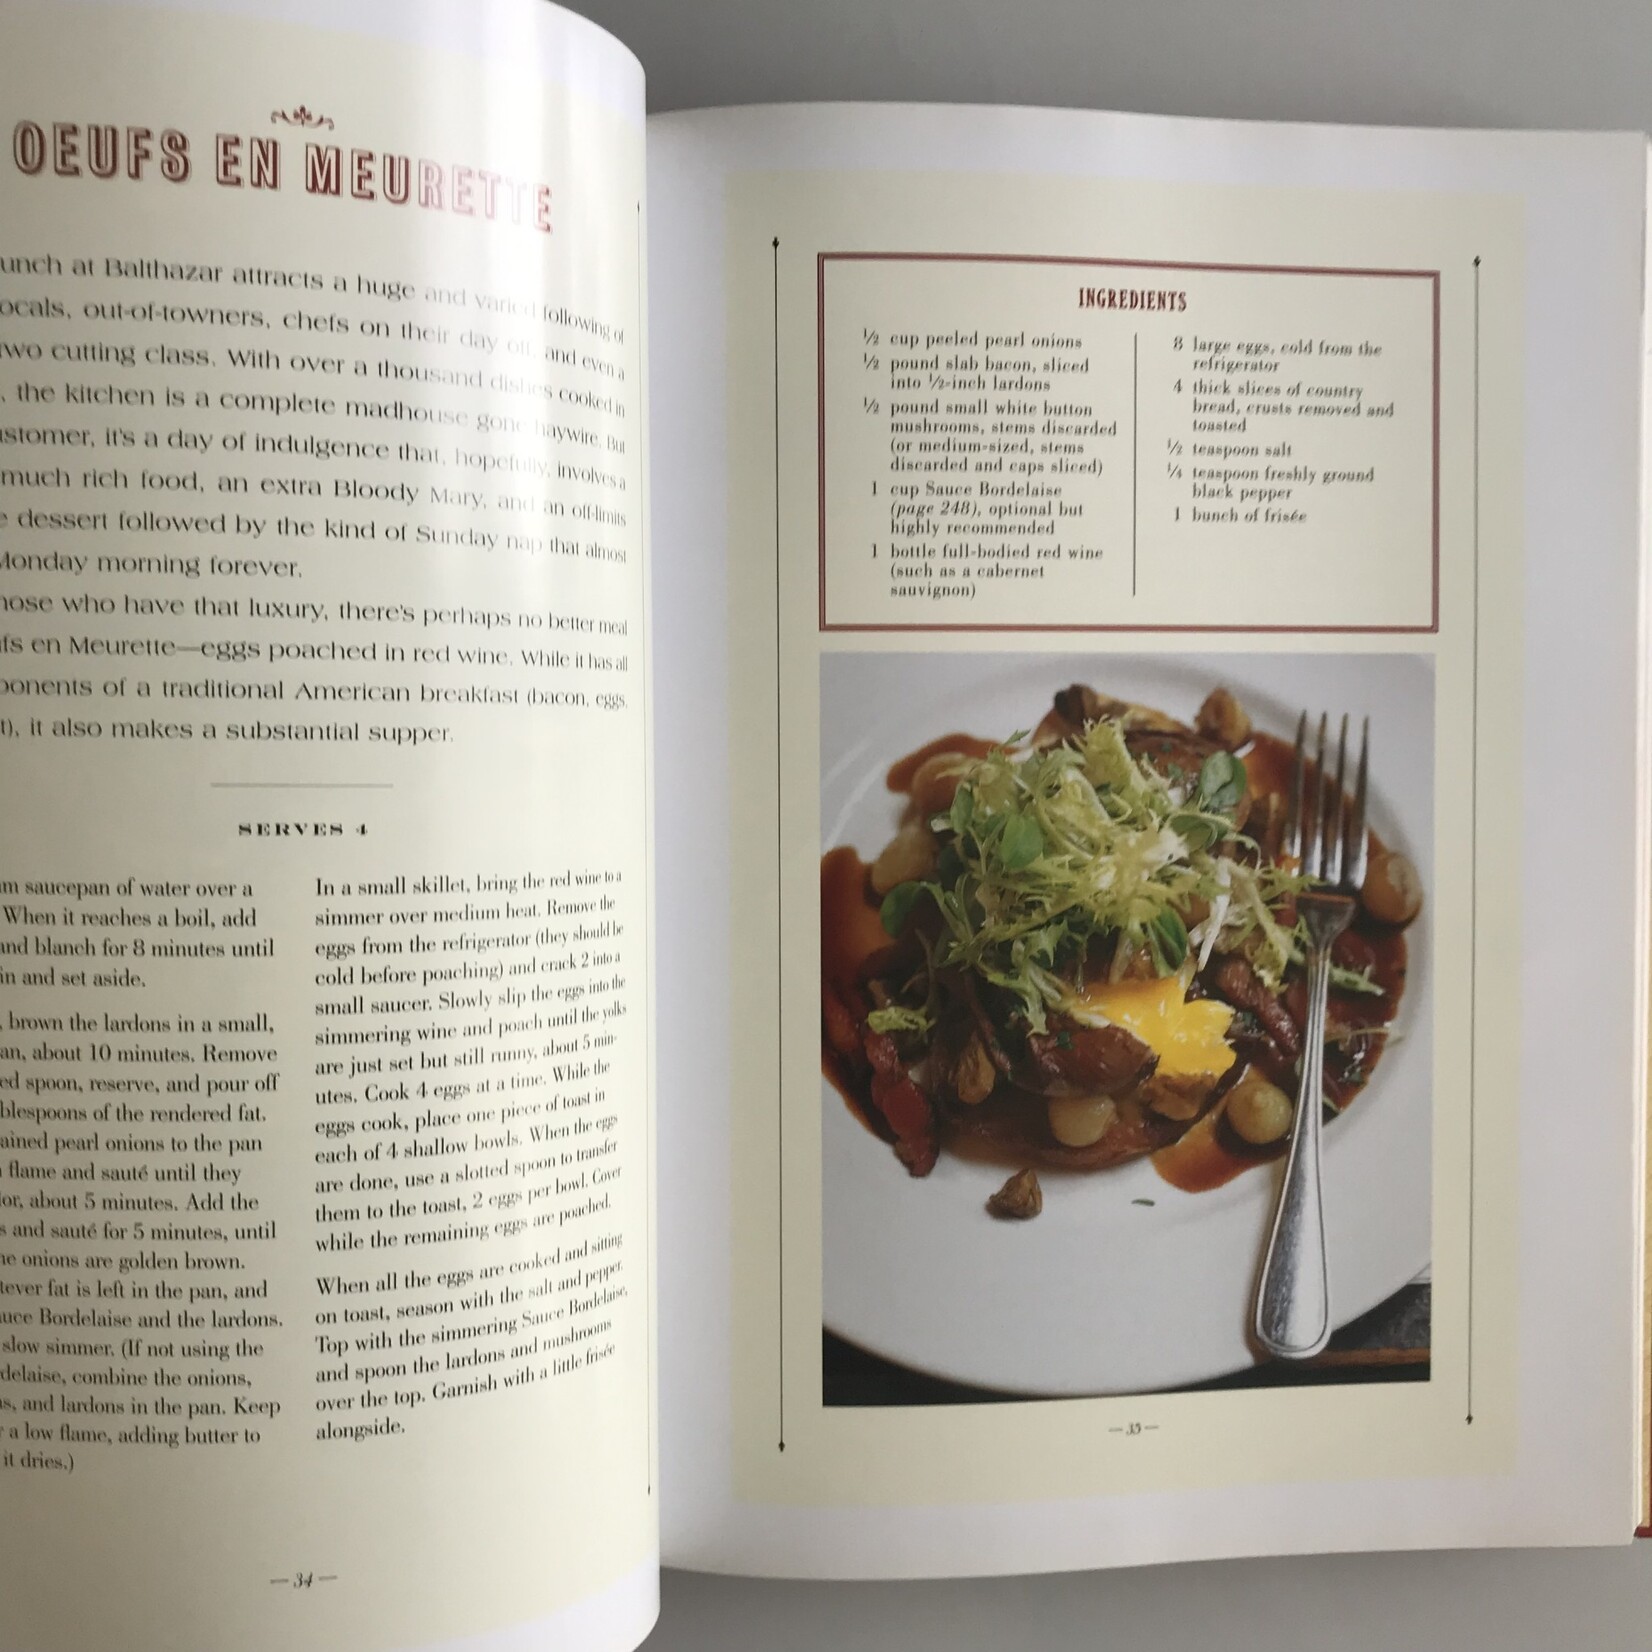 Keith McNally, Riad Nasr, Lee Hanson - The Balthazar Cookbook - Hardback (USED)